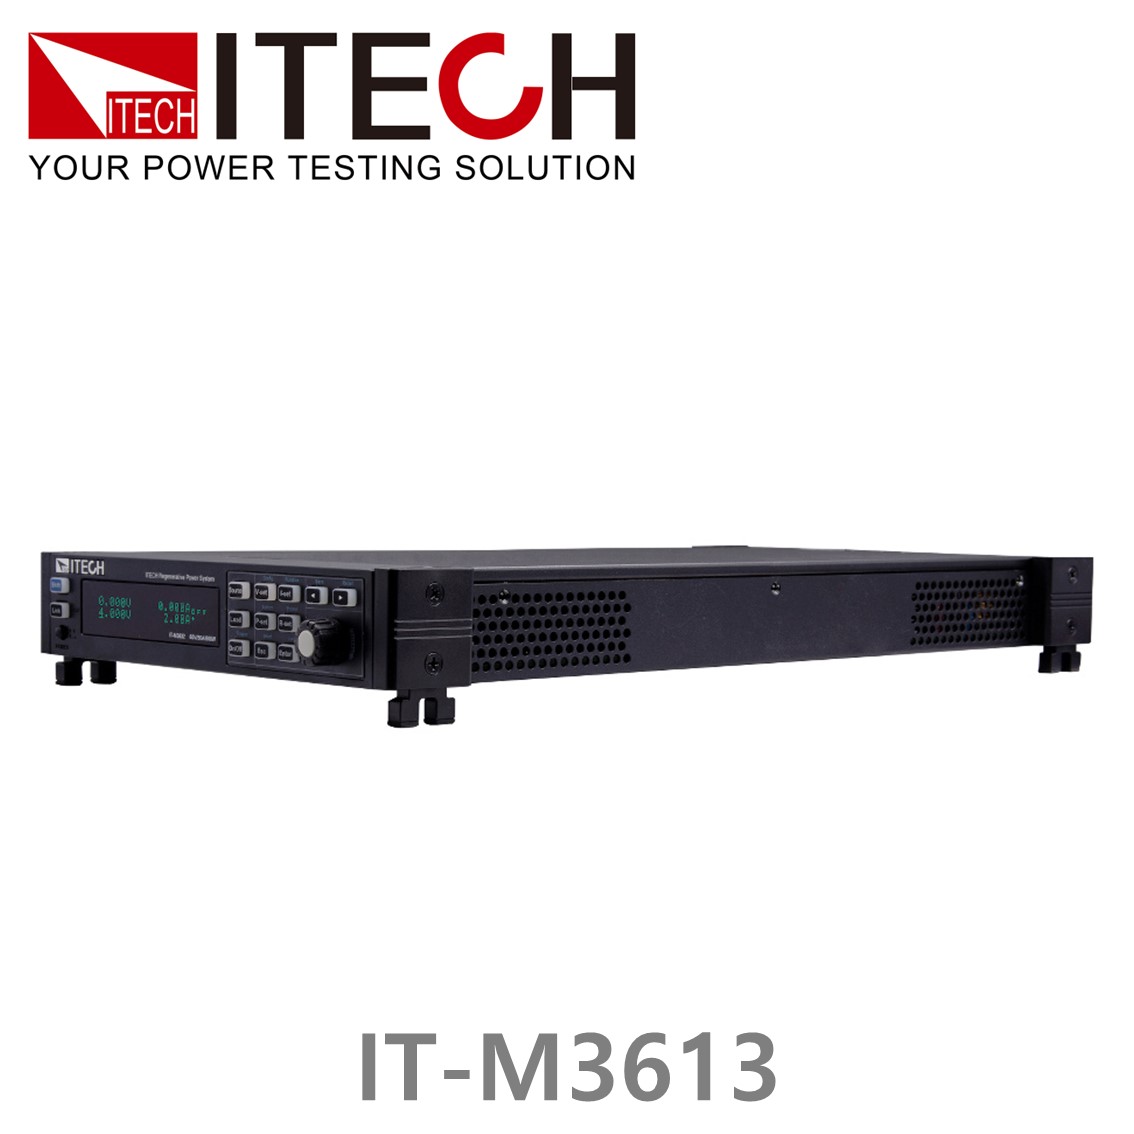 [ ITECH ] IT-M3613 회생형 DC파워서플라이 (150V/12A/200W), 재생 DC전원공급기